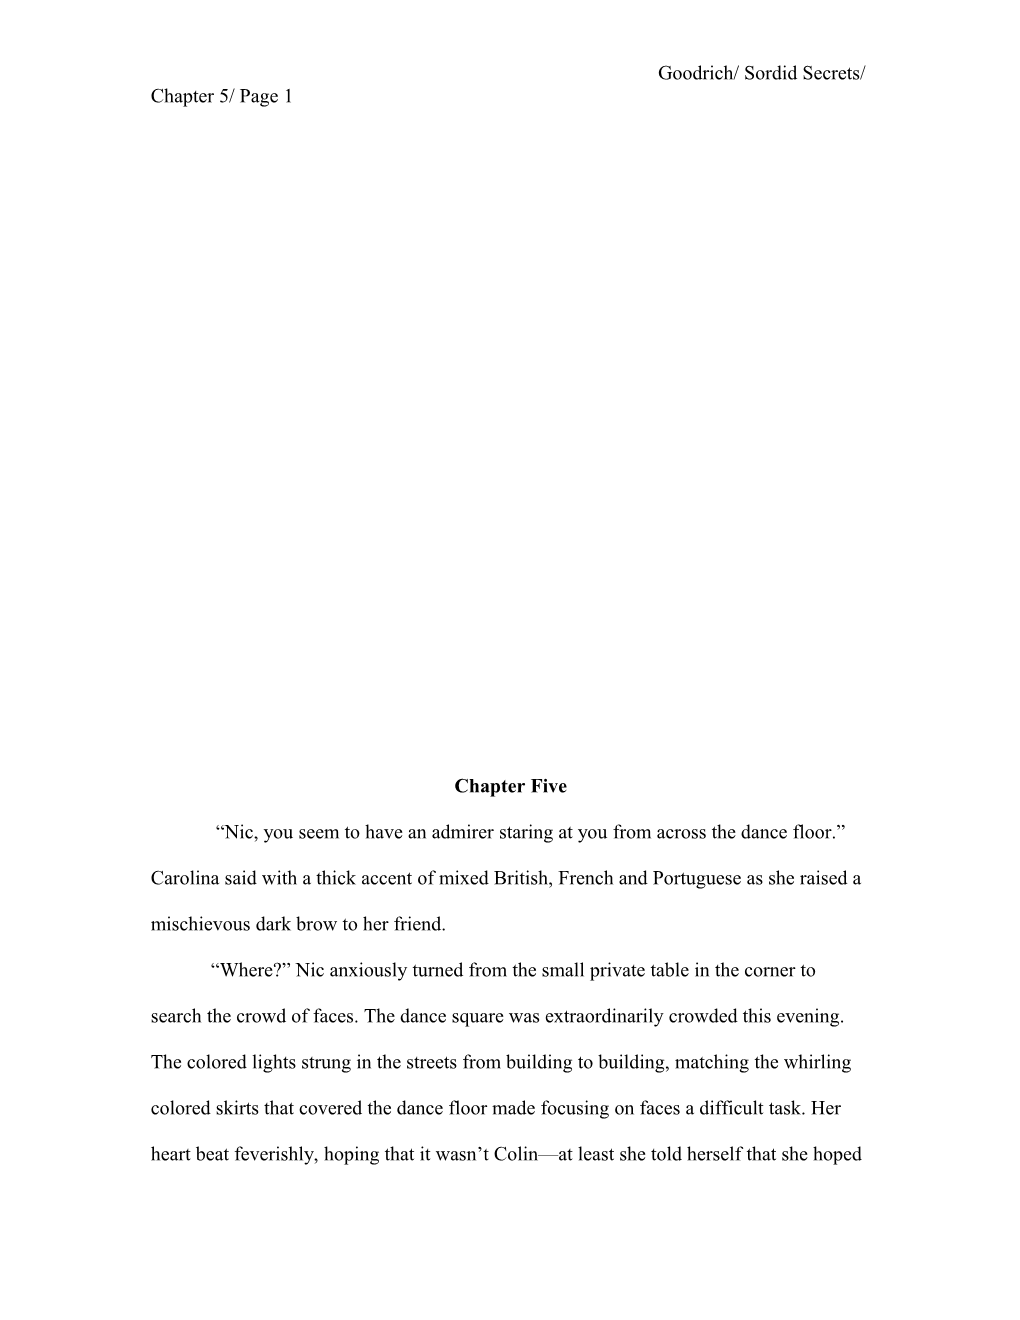 Goodrich/ Sordid Secrets/ Chapter 5/ Page 18